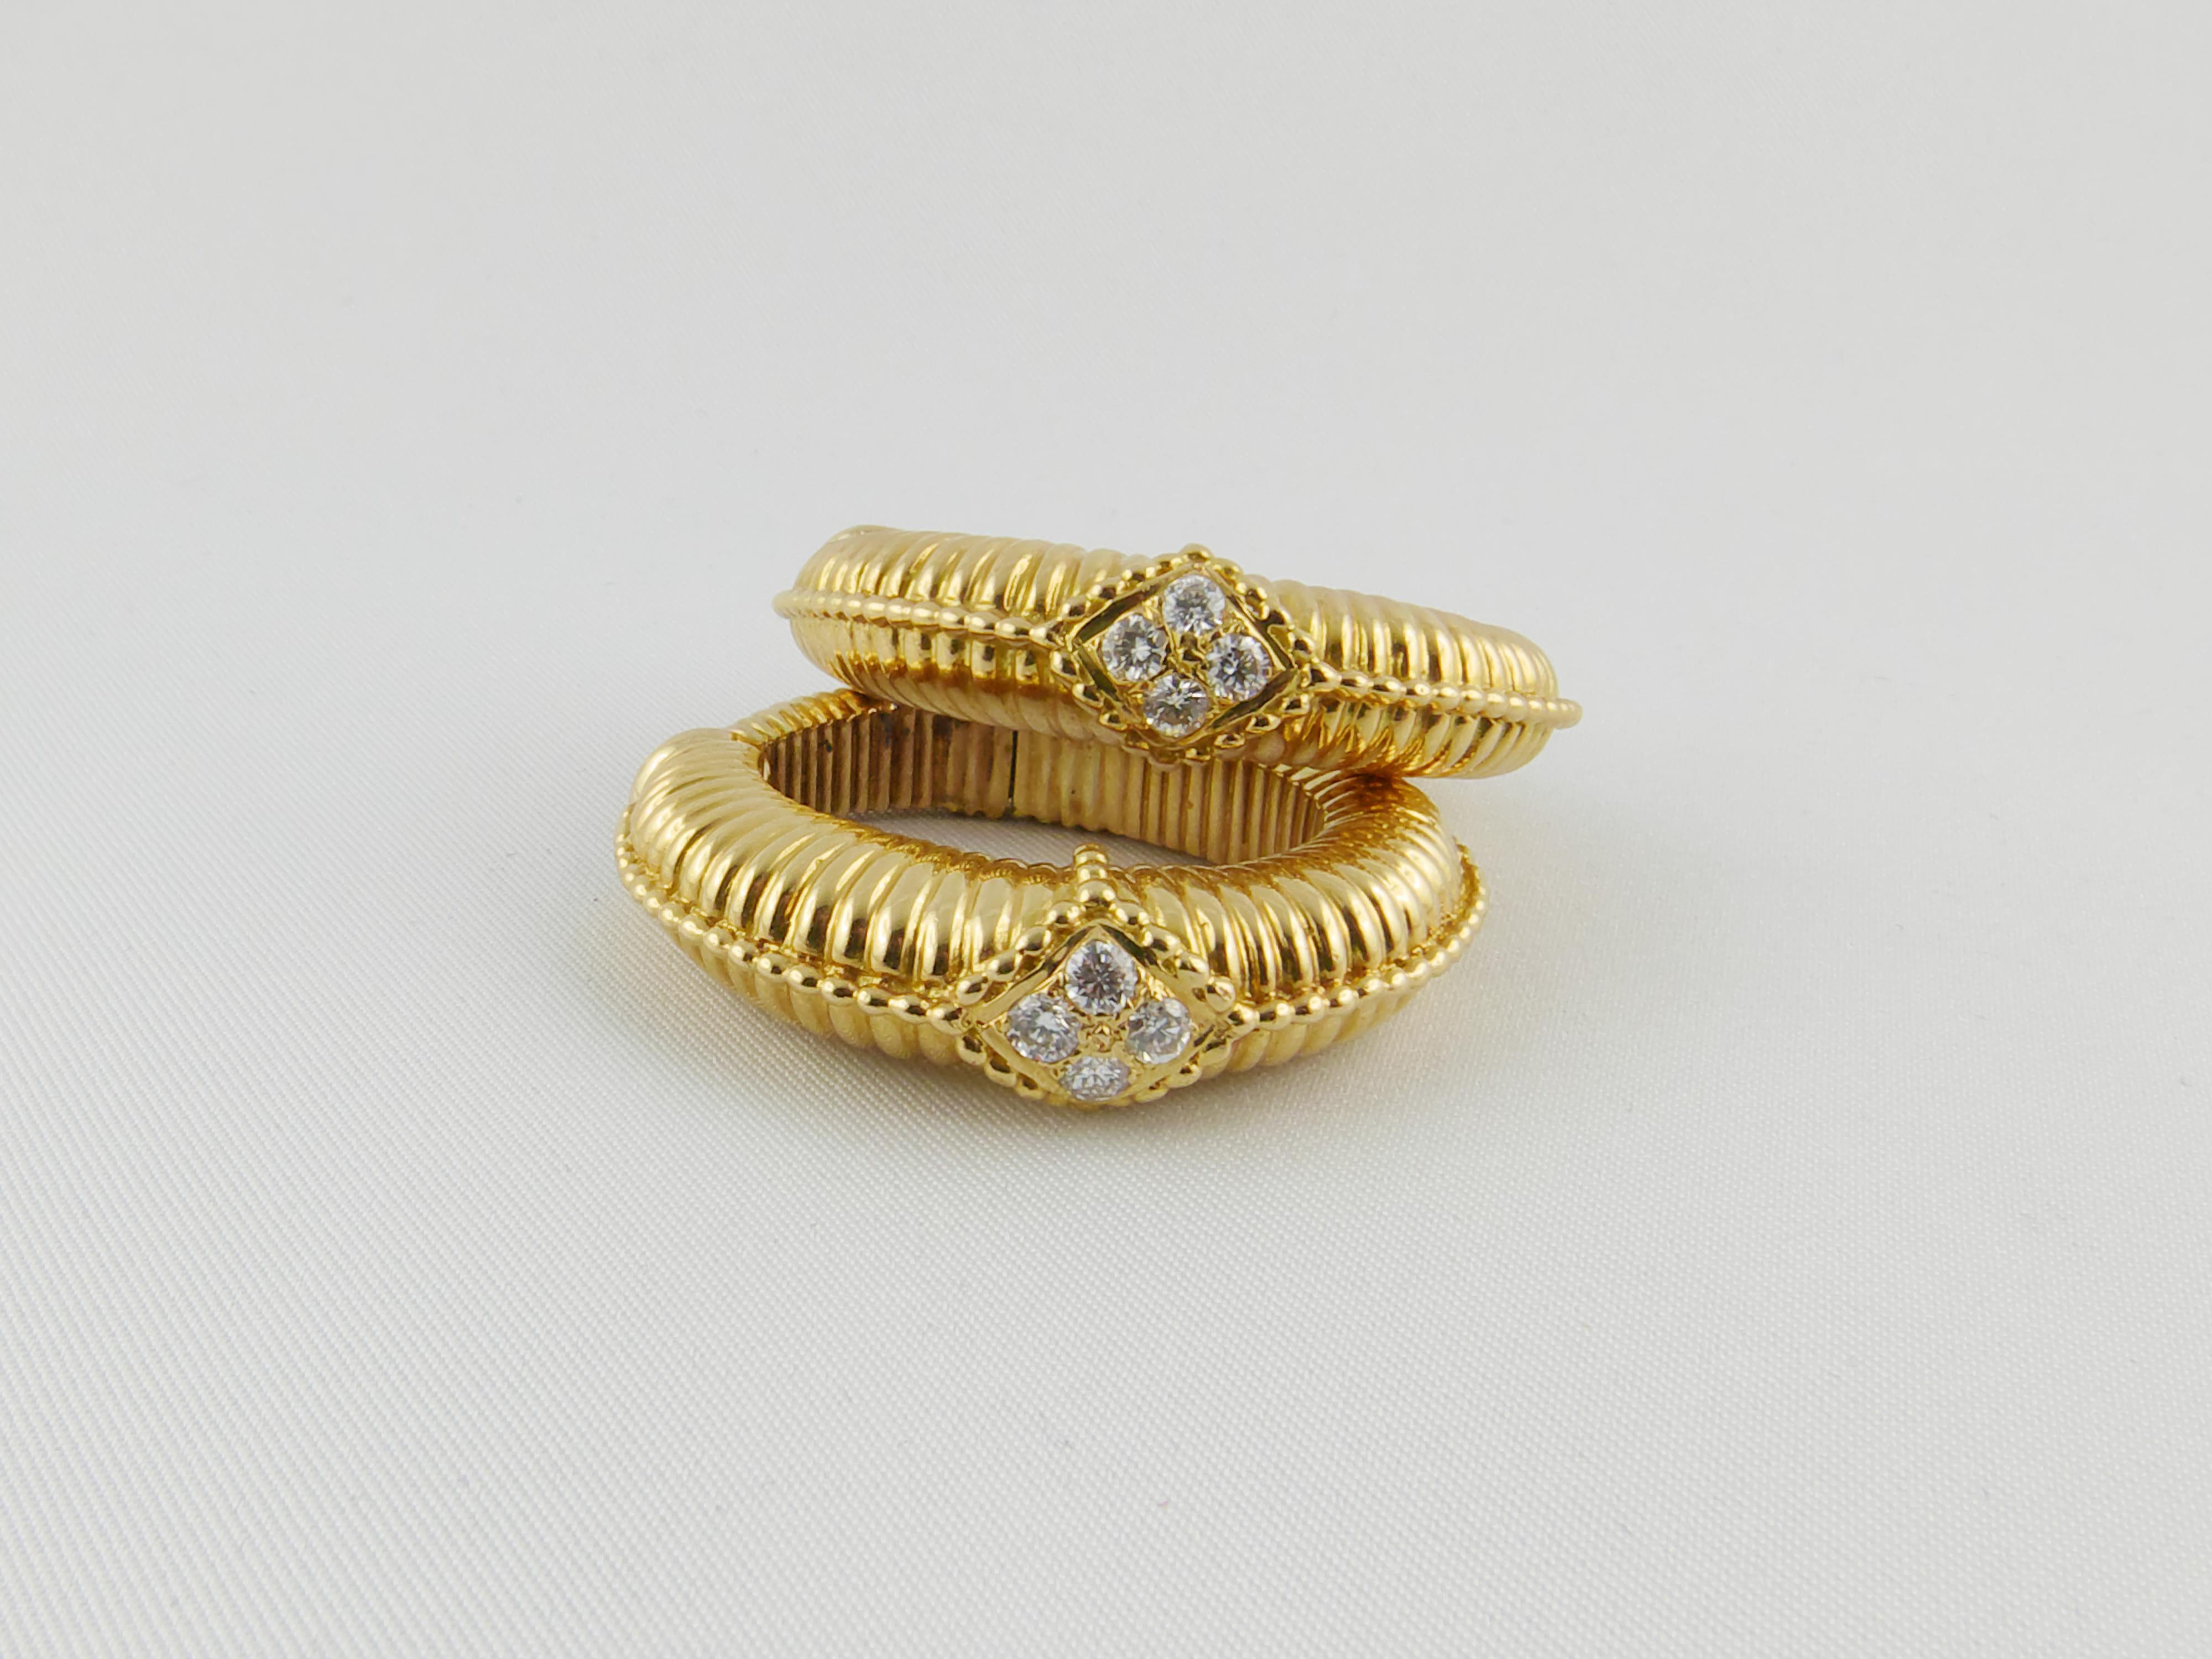 Women's 1970s Van Cleef & Arpels Yellow Gold and Diamonds Bracelet and Earrings Set